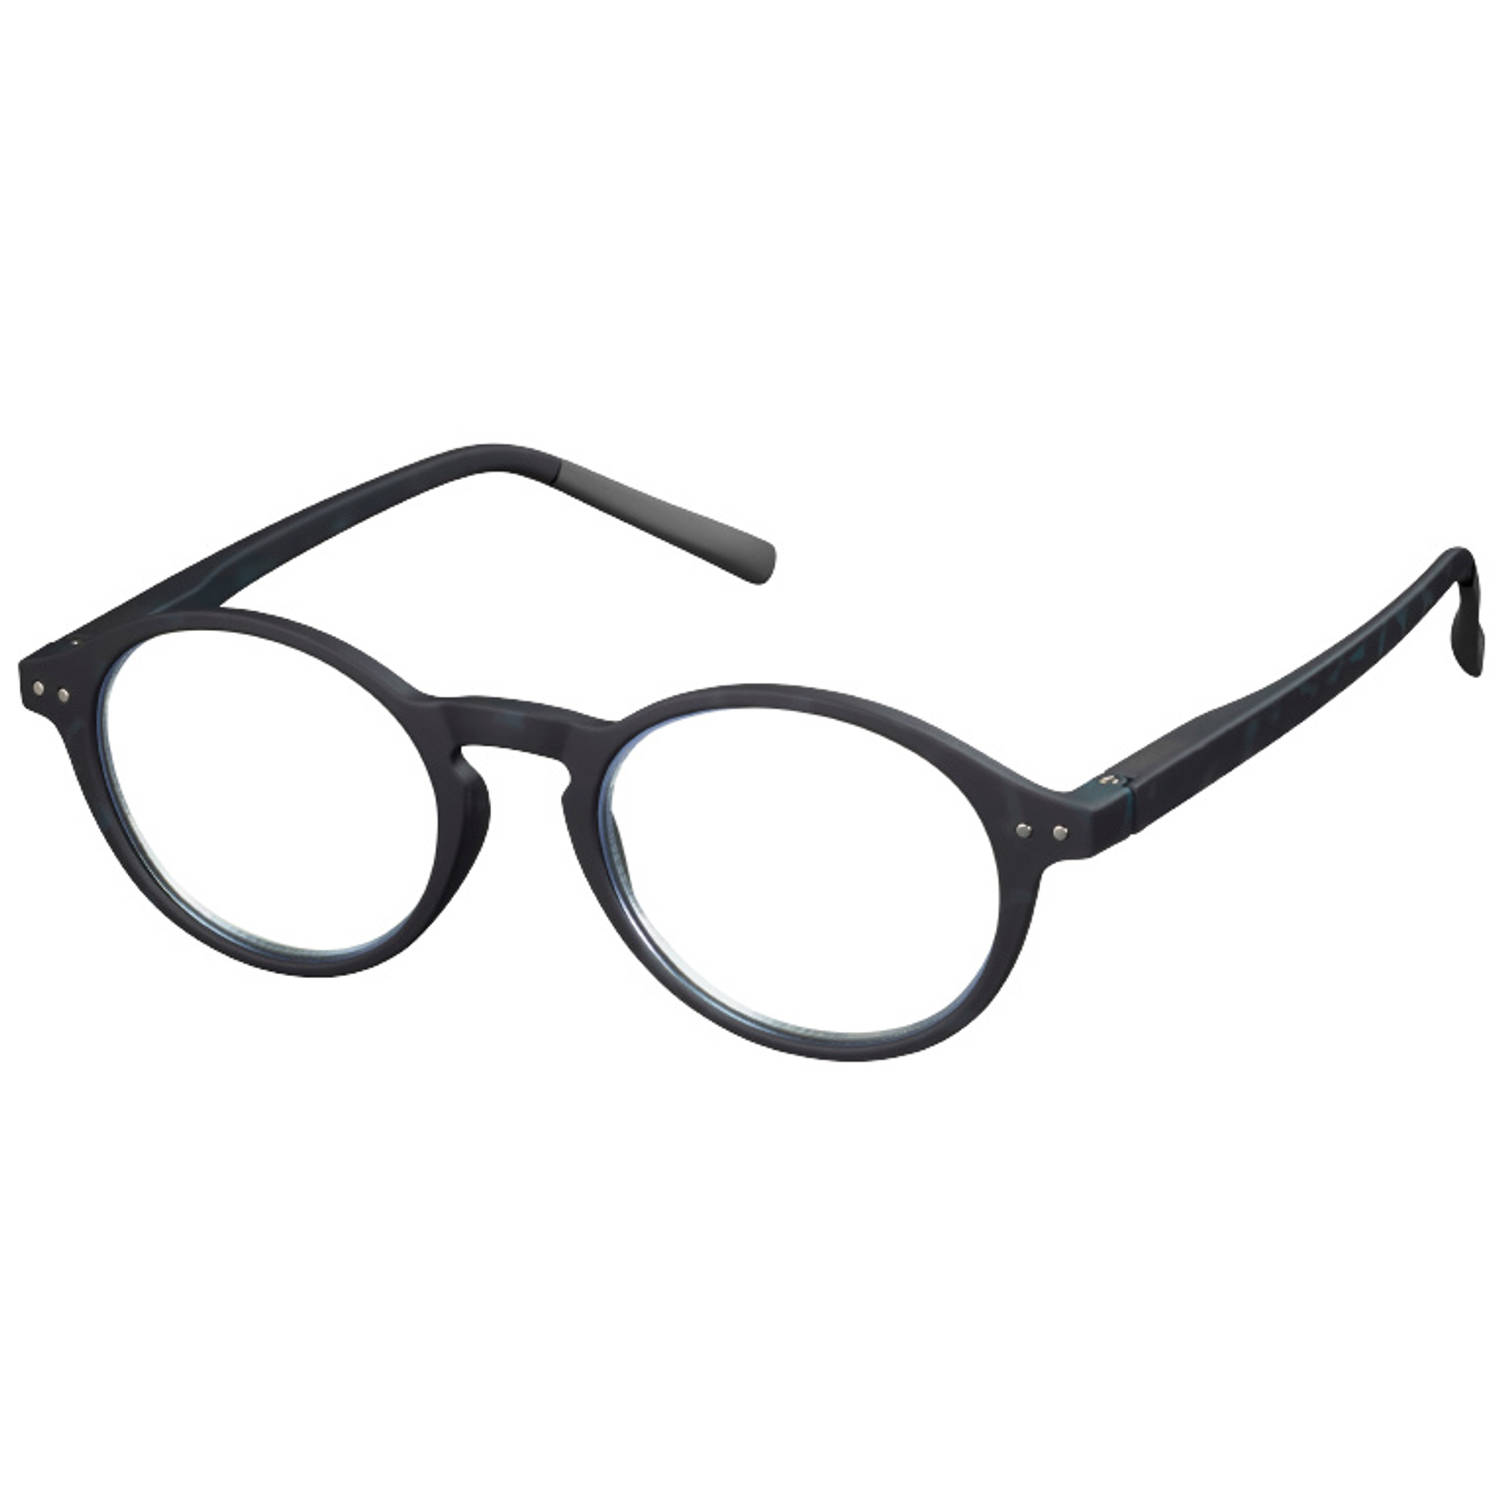 Solar Eyewear Leesbril Slr01 Unisex Acryl Zwart Sterkte +2,00